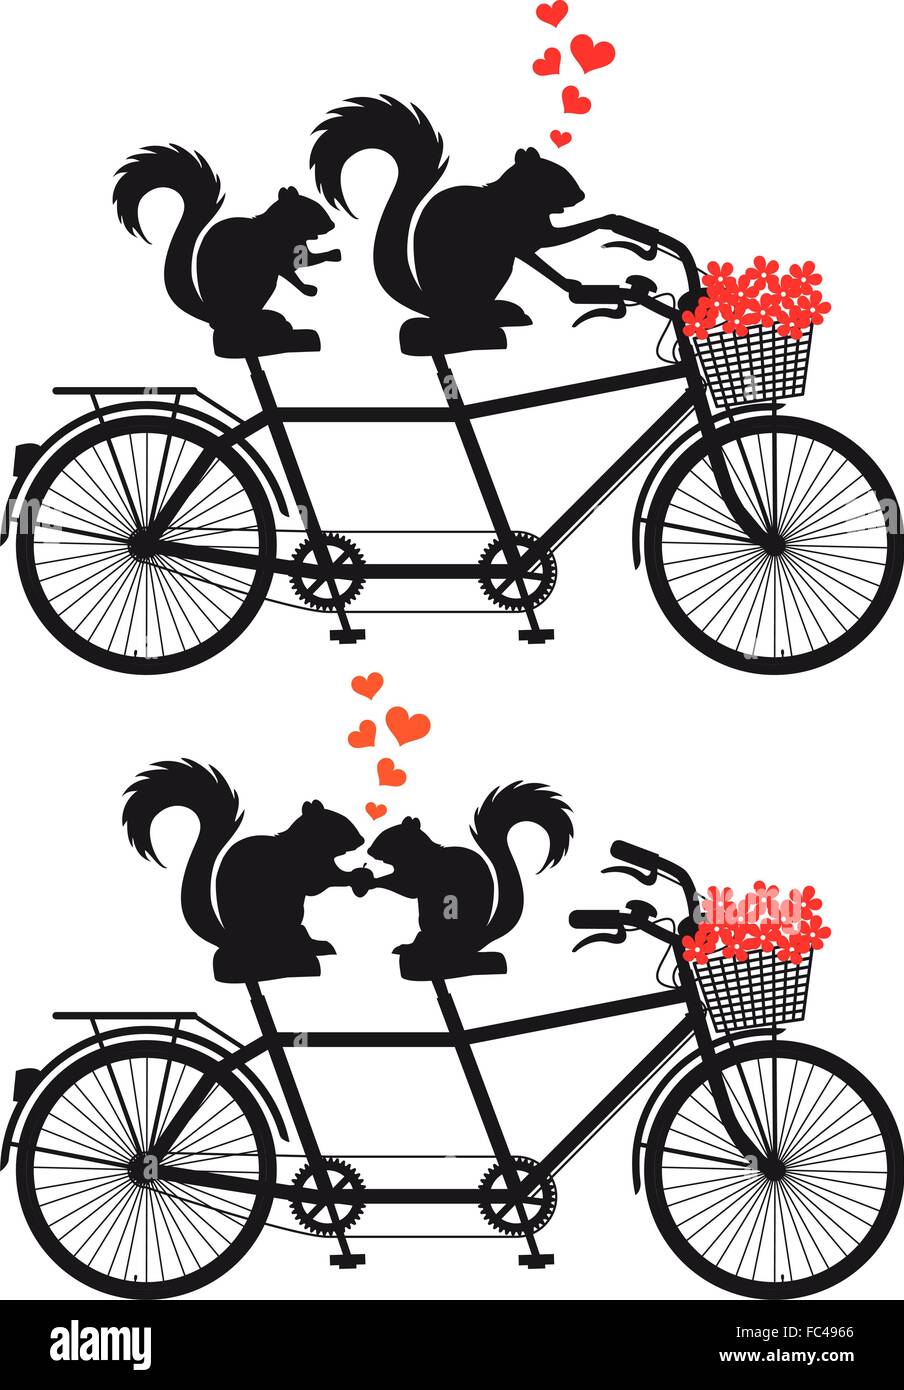 Eichhörnchen Sie auf Tandem-Fahrrad, Vektor-illustration Stock Vektor